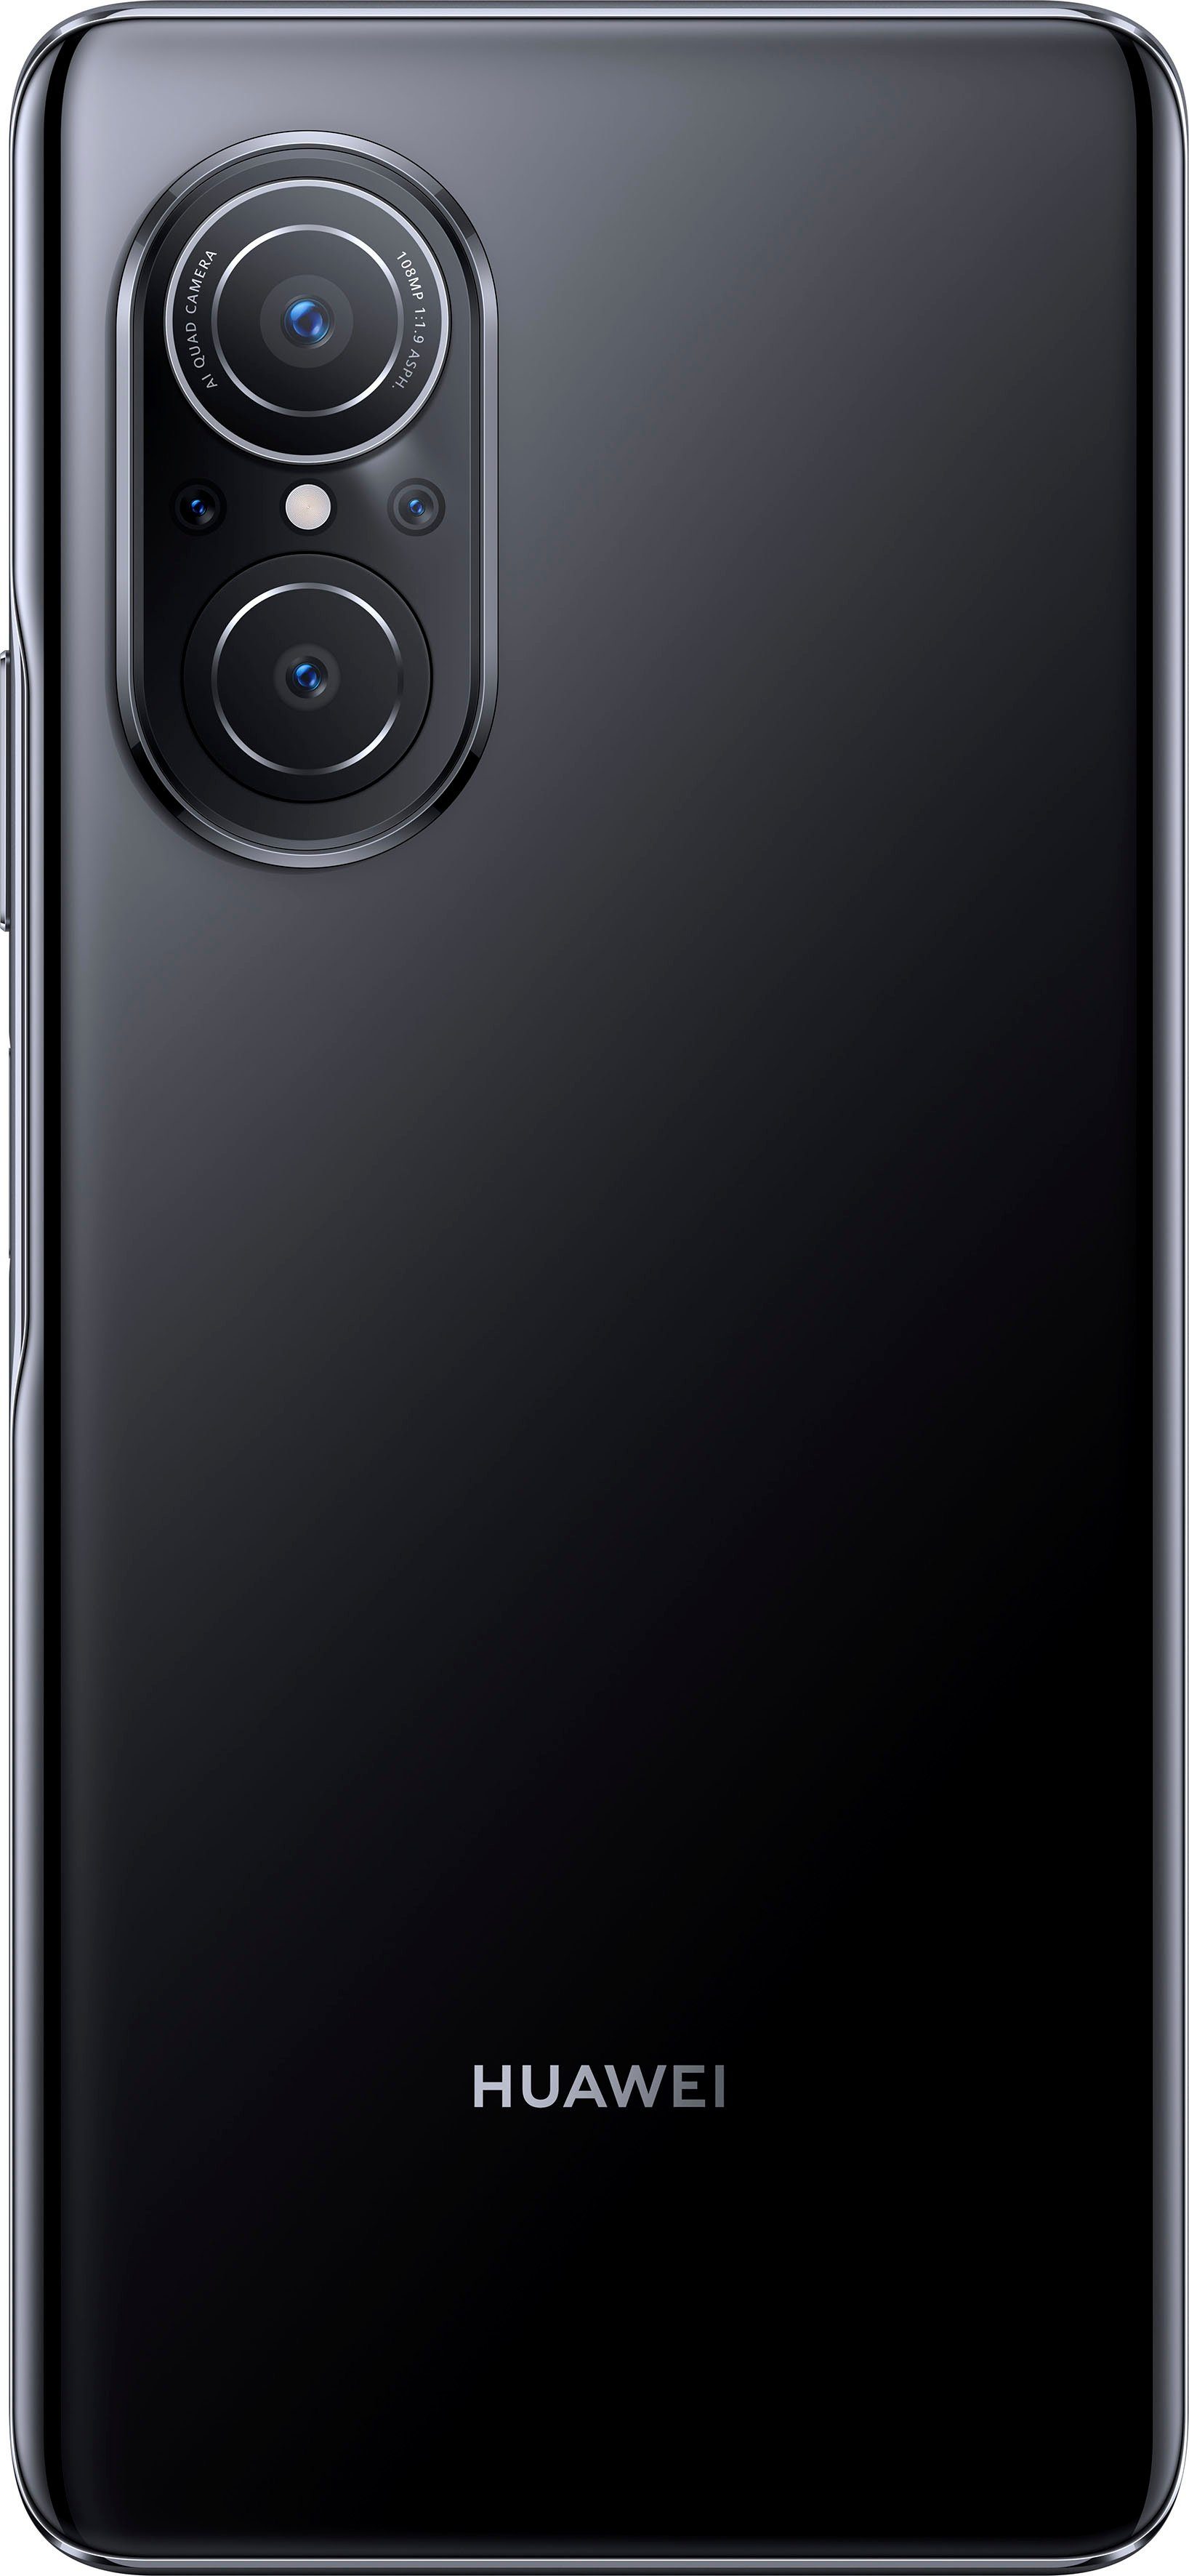 Smartphone GB Kamera) MP Black nova 108 Huawei cm/6,78 128 SE (17,22 Speicherplatz, 9 Zoll, Midnight